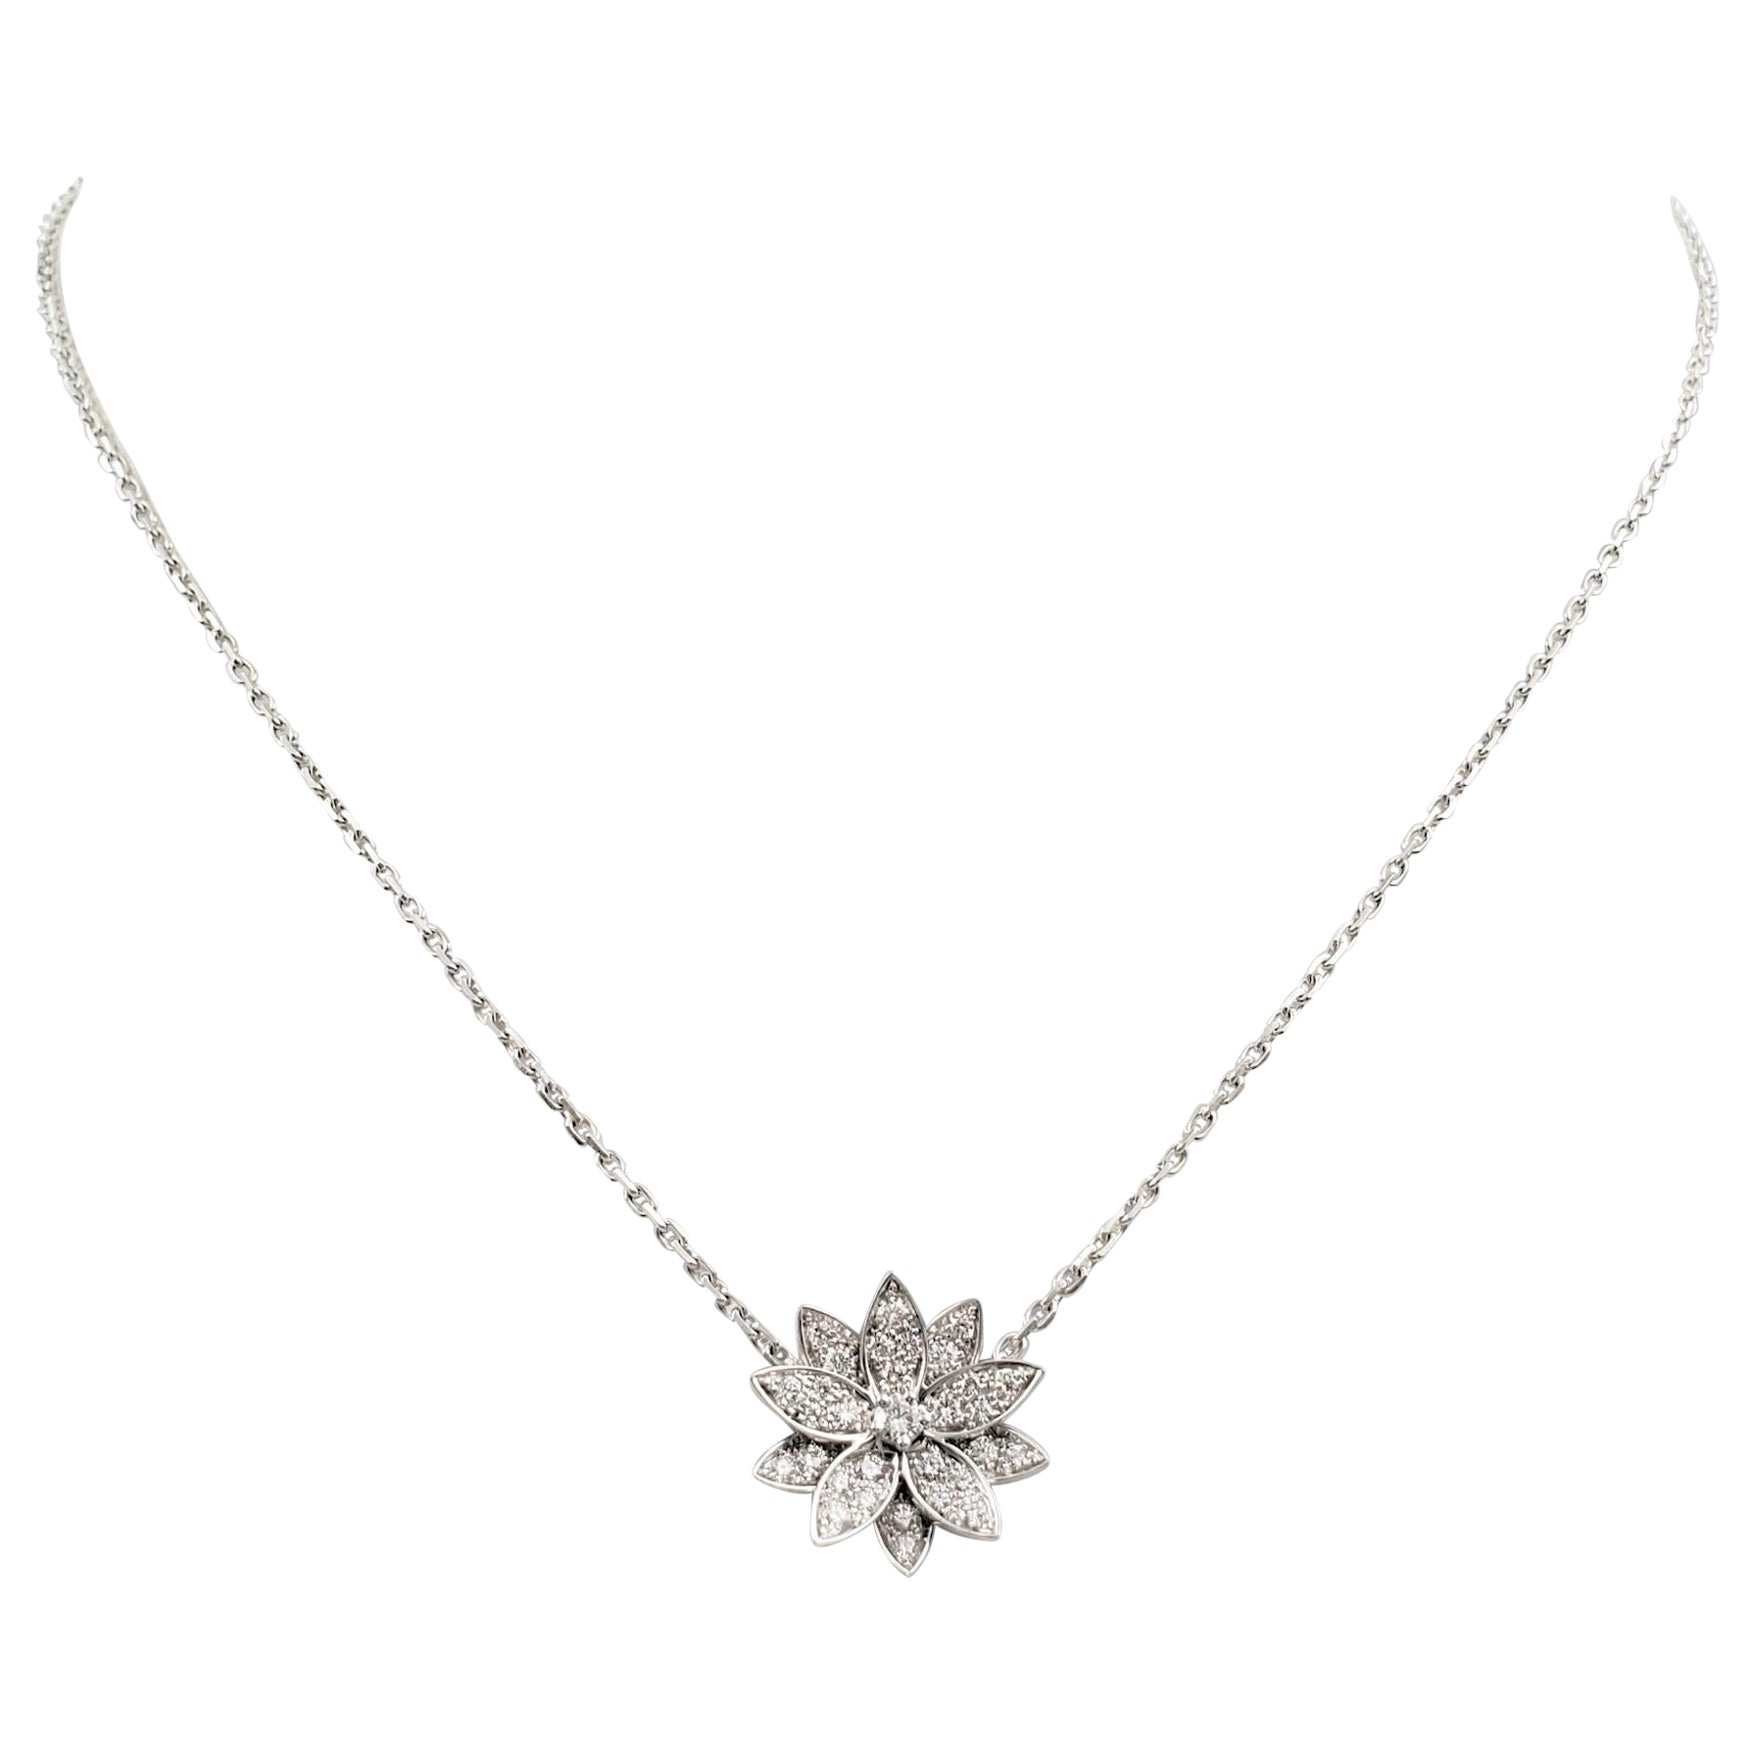 Van Cleef & Arpels 'Lotus' White Gold Diamond Pendant Necklace